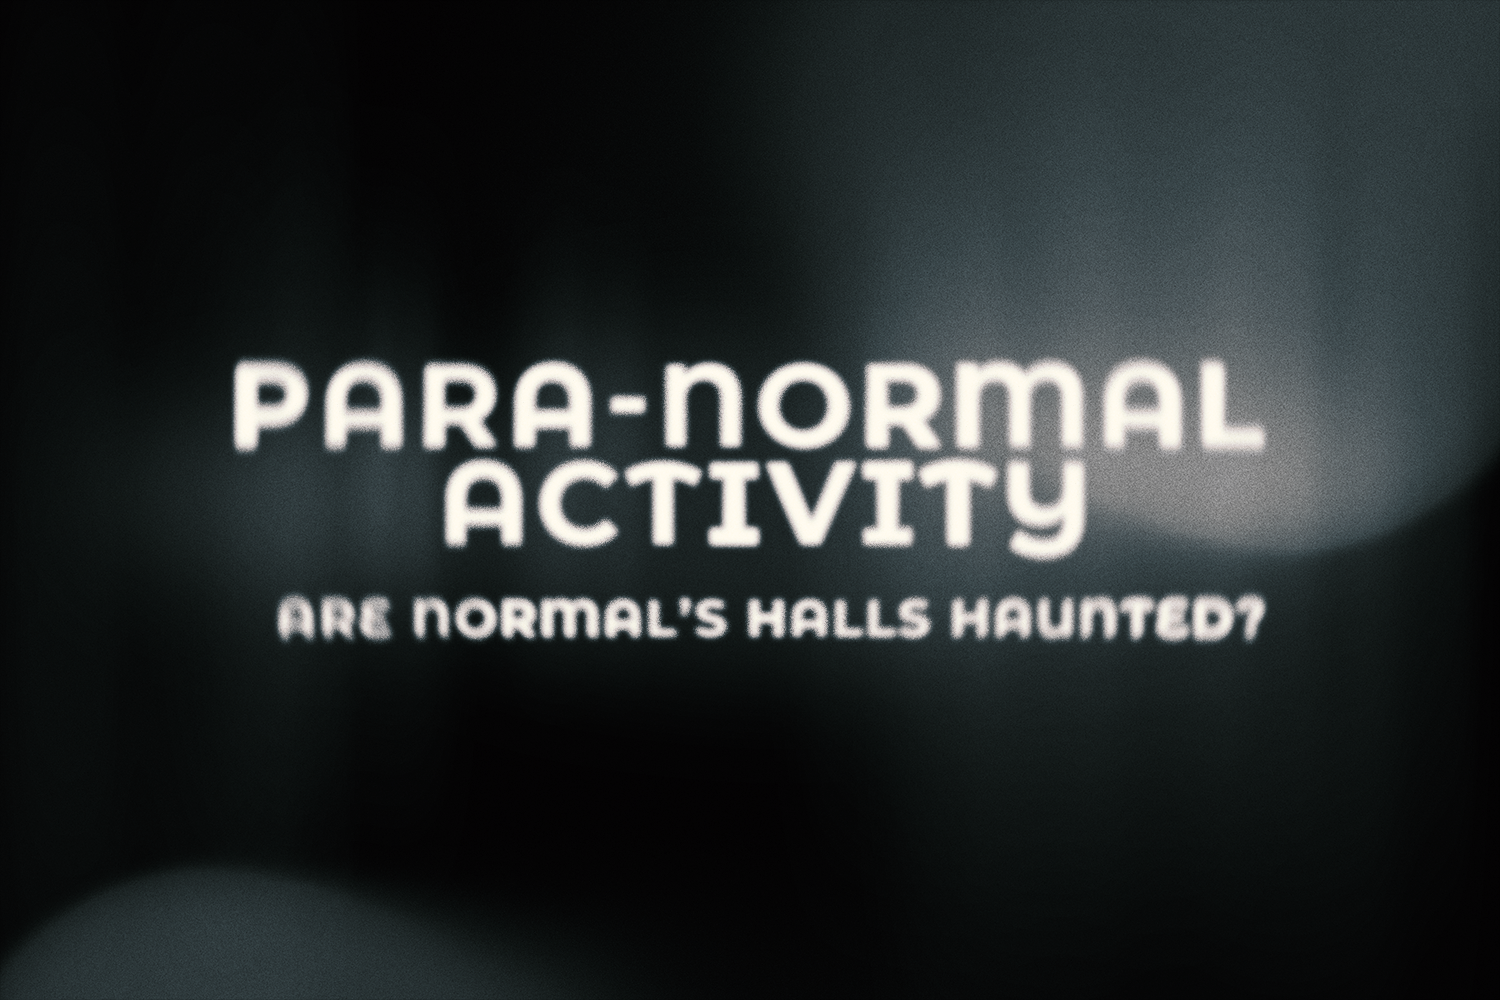 Para-Normal Activity